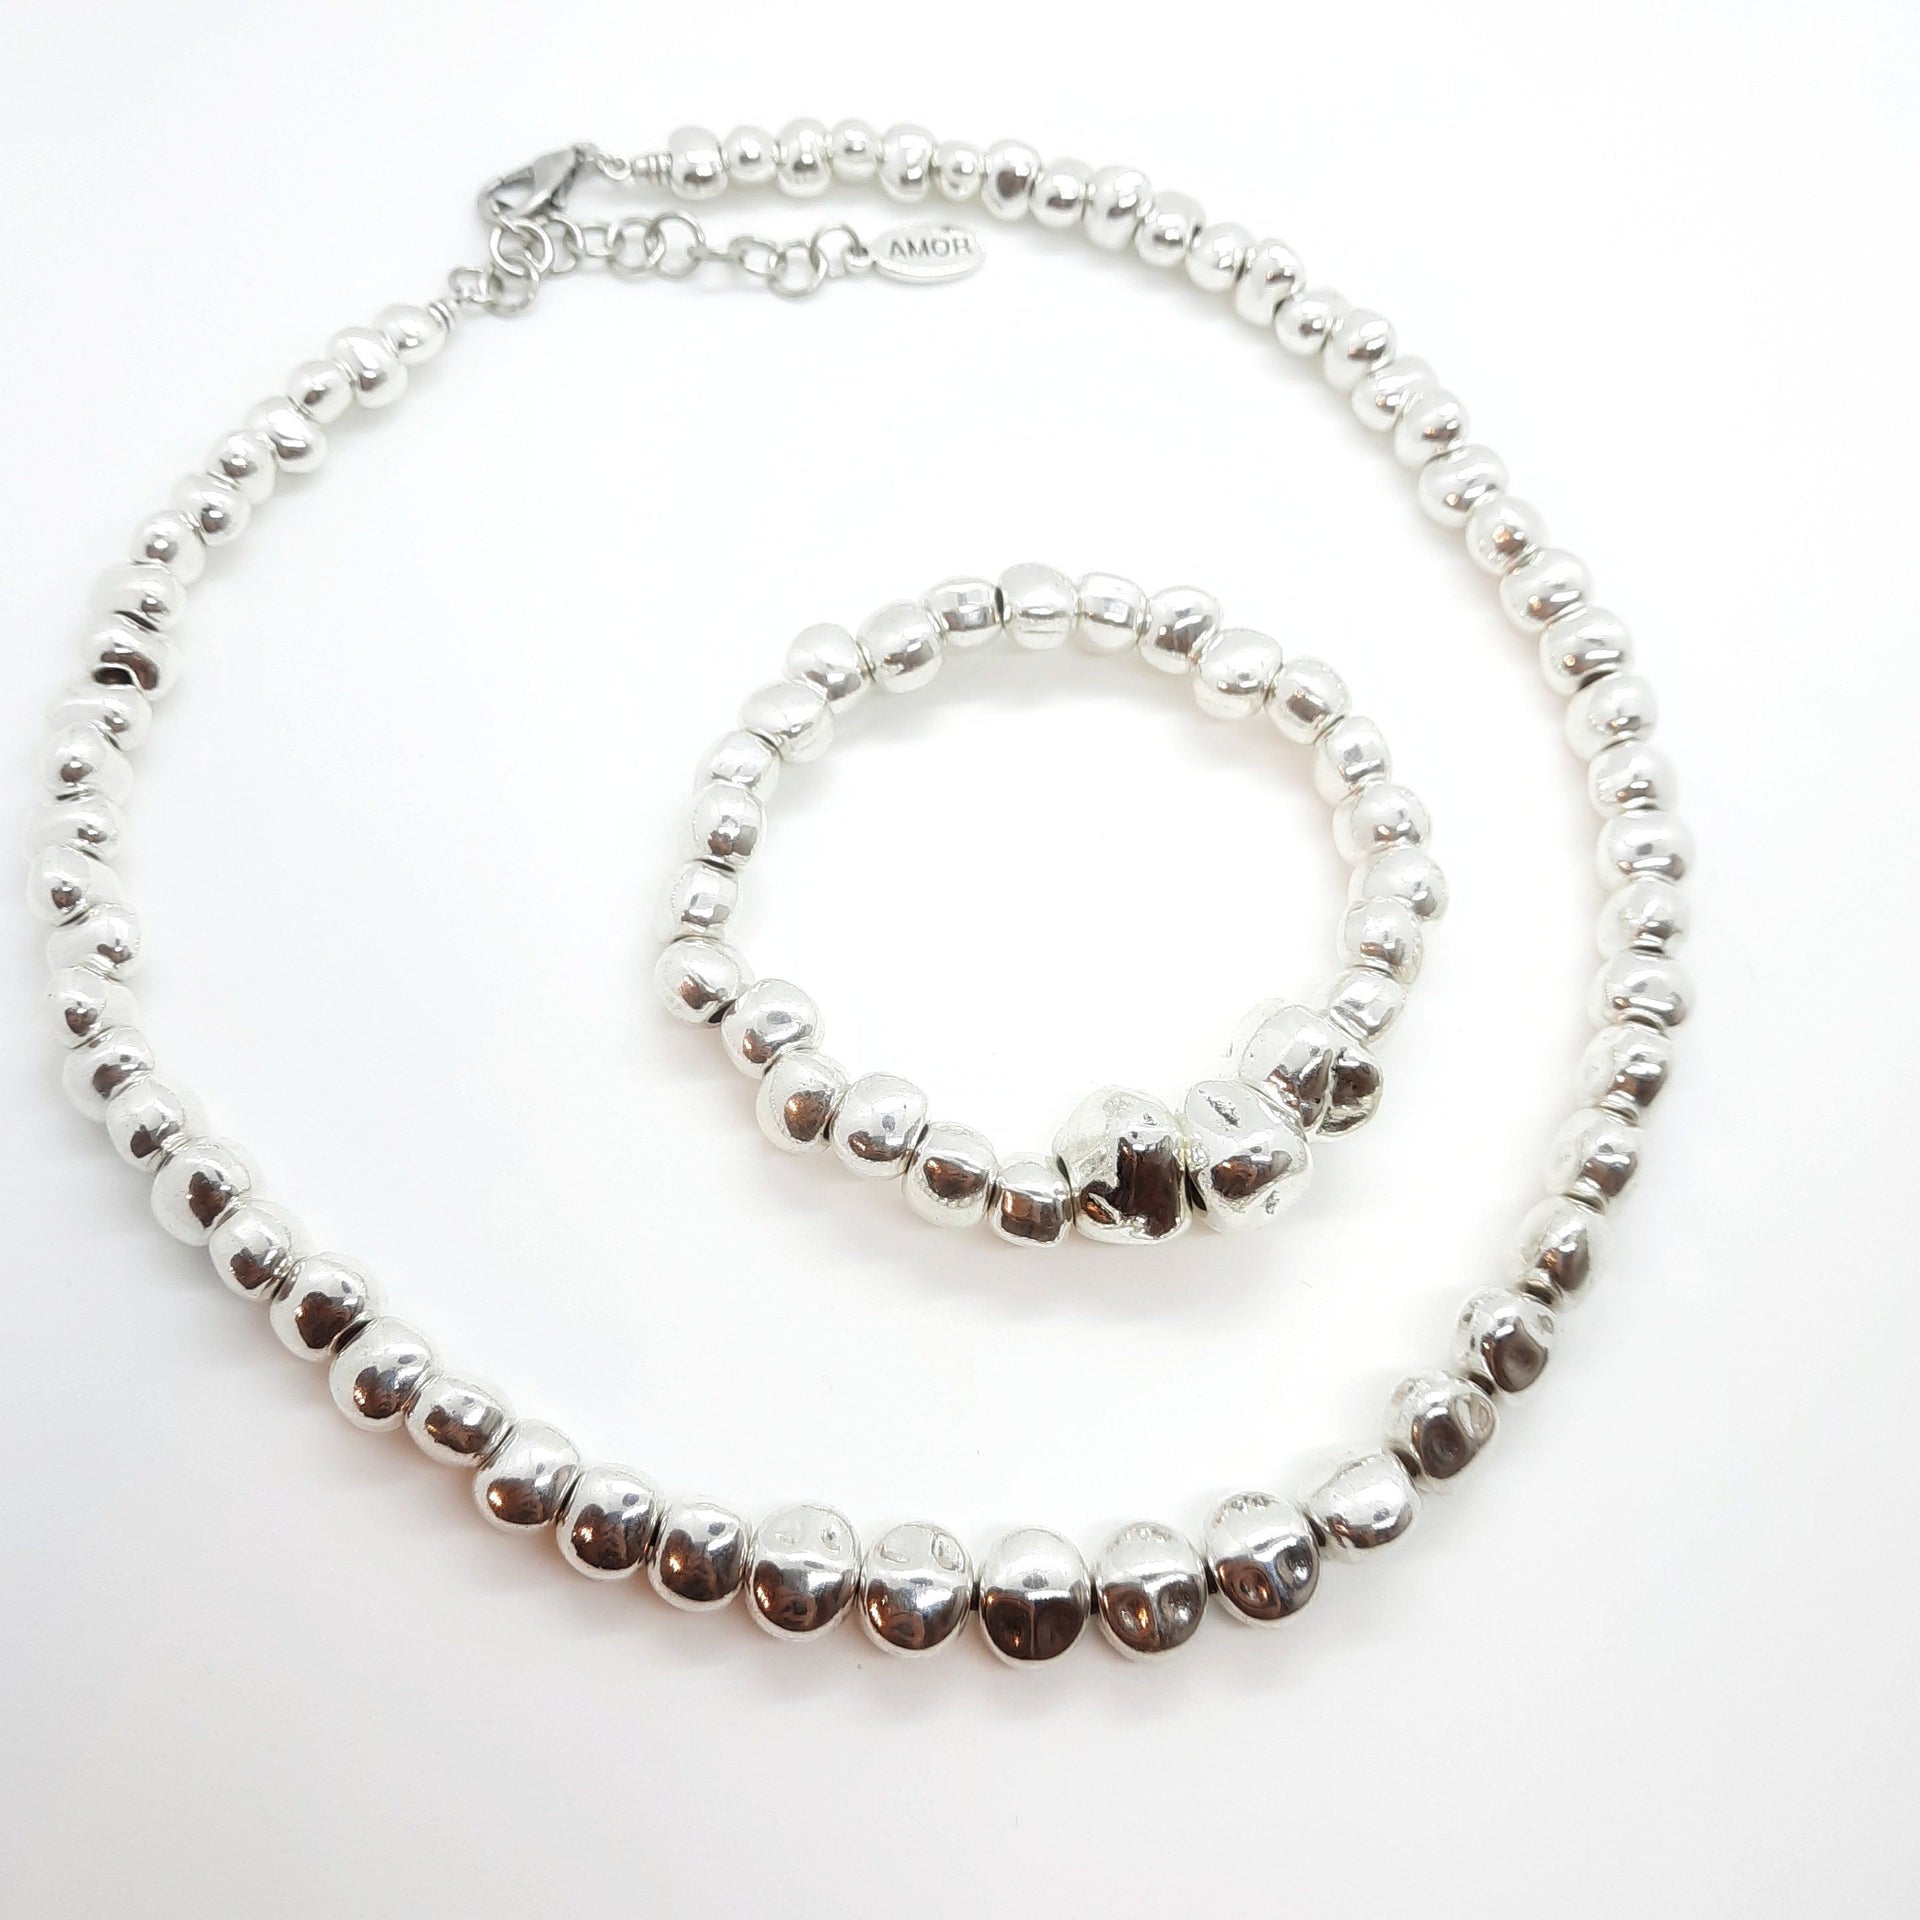 Kurze Perlen Halskette aus Silber- Lana Halsketten KOOMPLIMENTS Set Halskette + Armband 17 cm